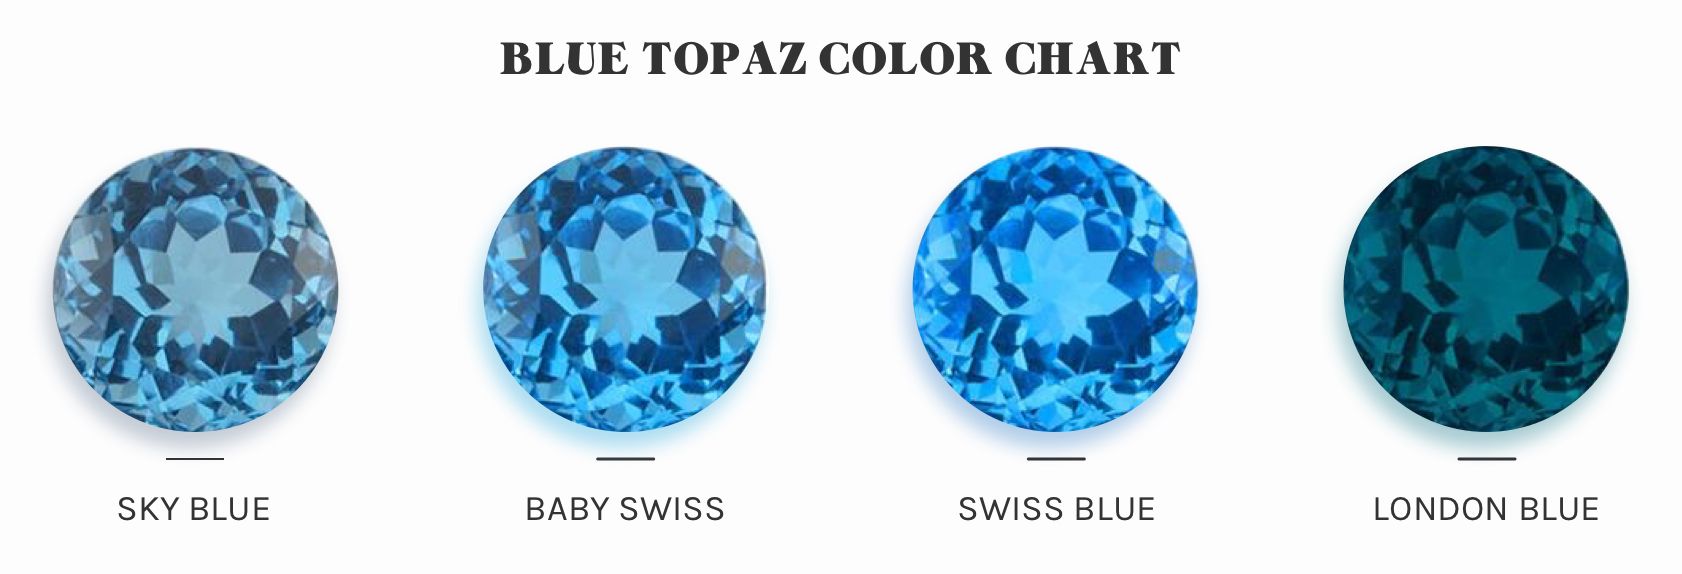 blue topaz color varieties 